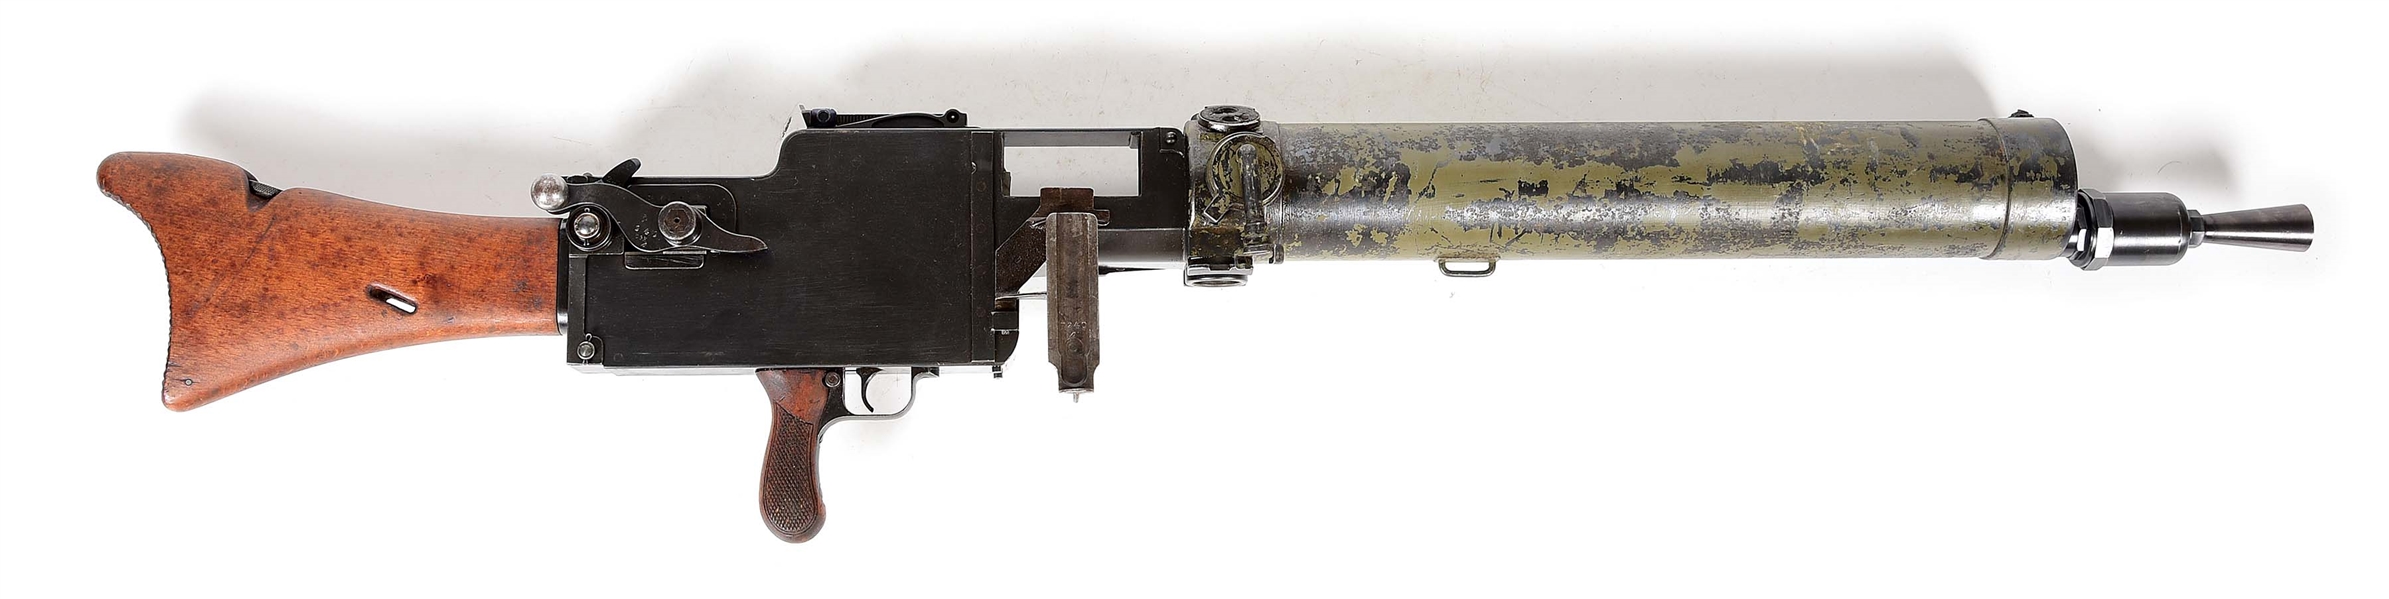 (N) PARTICULARY FINE ORIGINAL GERMAN WW1 MG 08/15 MAXIM MACHINE GUN (CURIO AND RELIC).